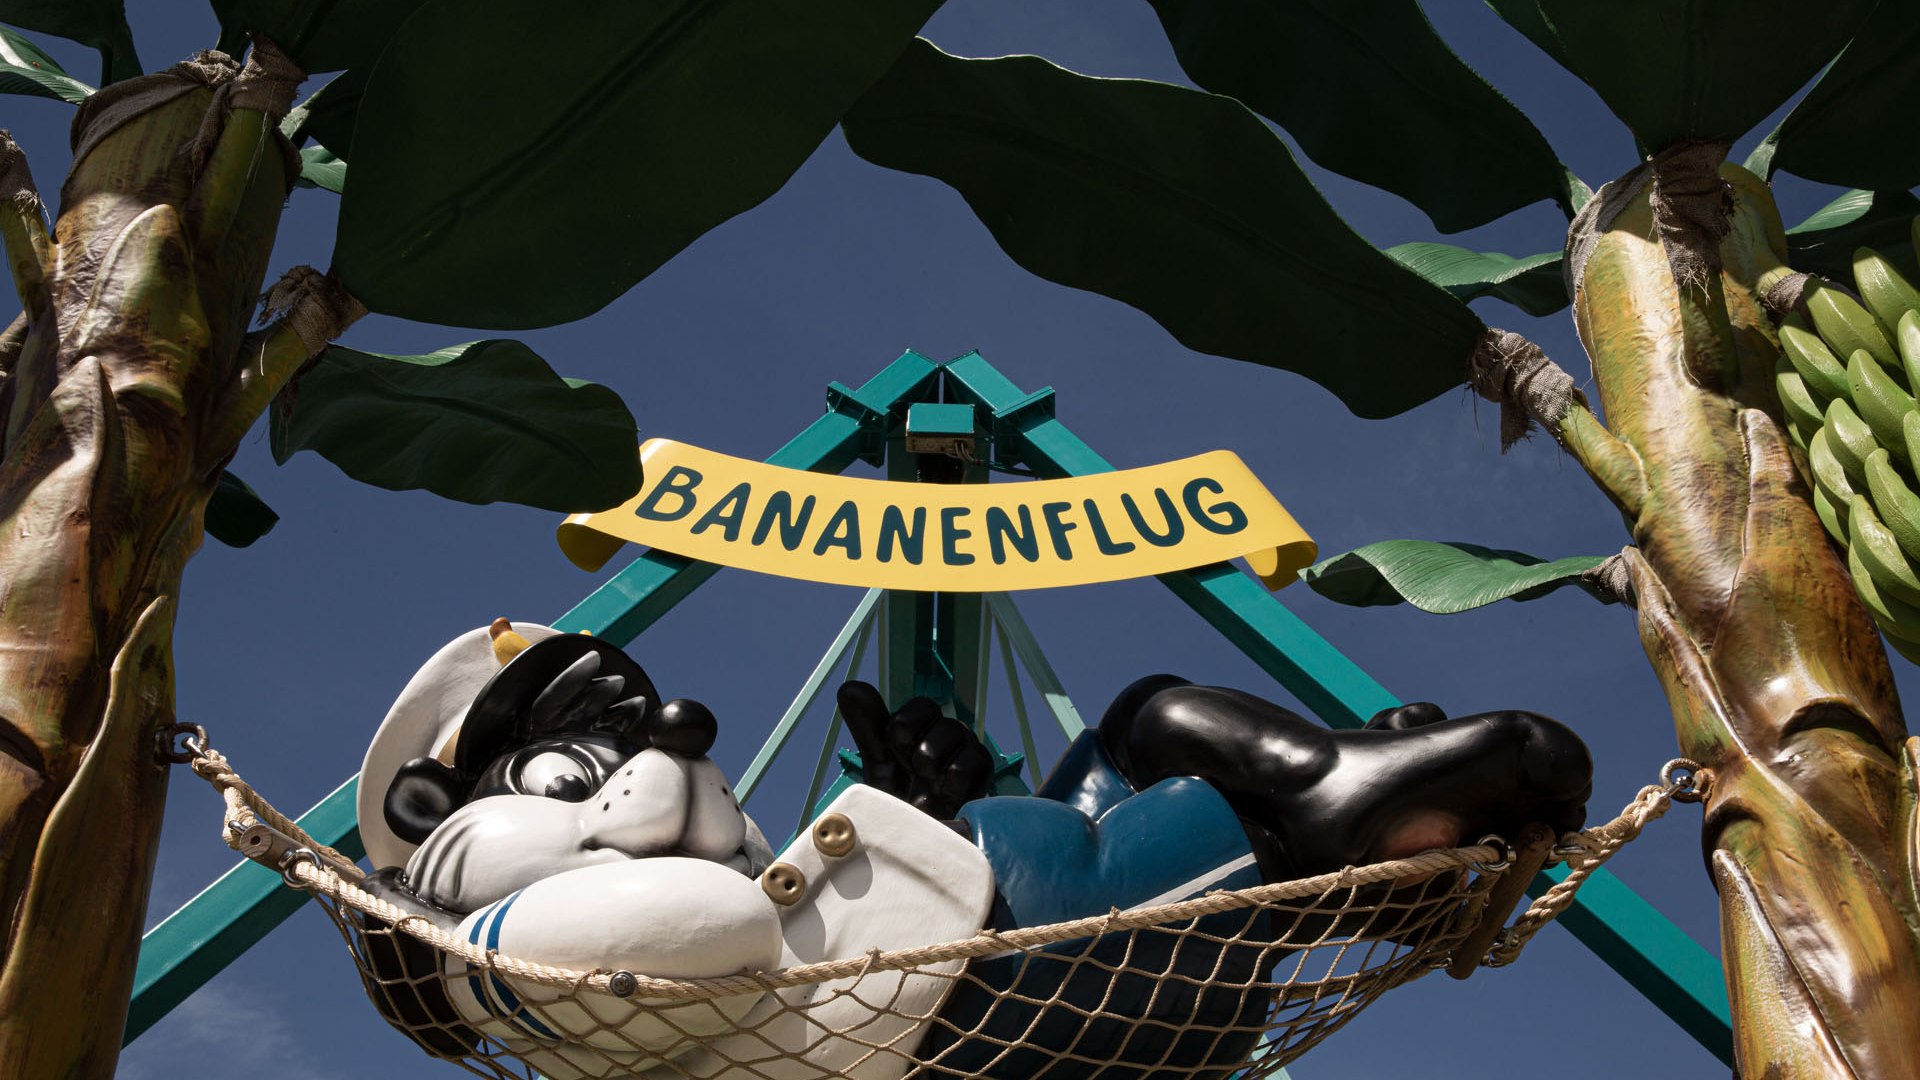 Schiffsschaukel Bananenflug im Potts Park in Minden, © Tourismus NRW e.V., Foto Holger Hage